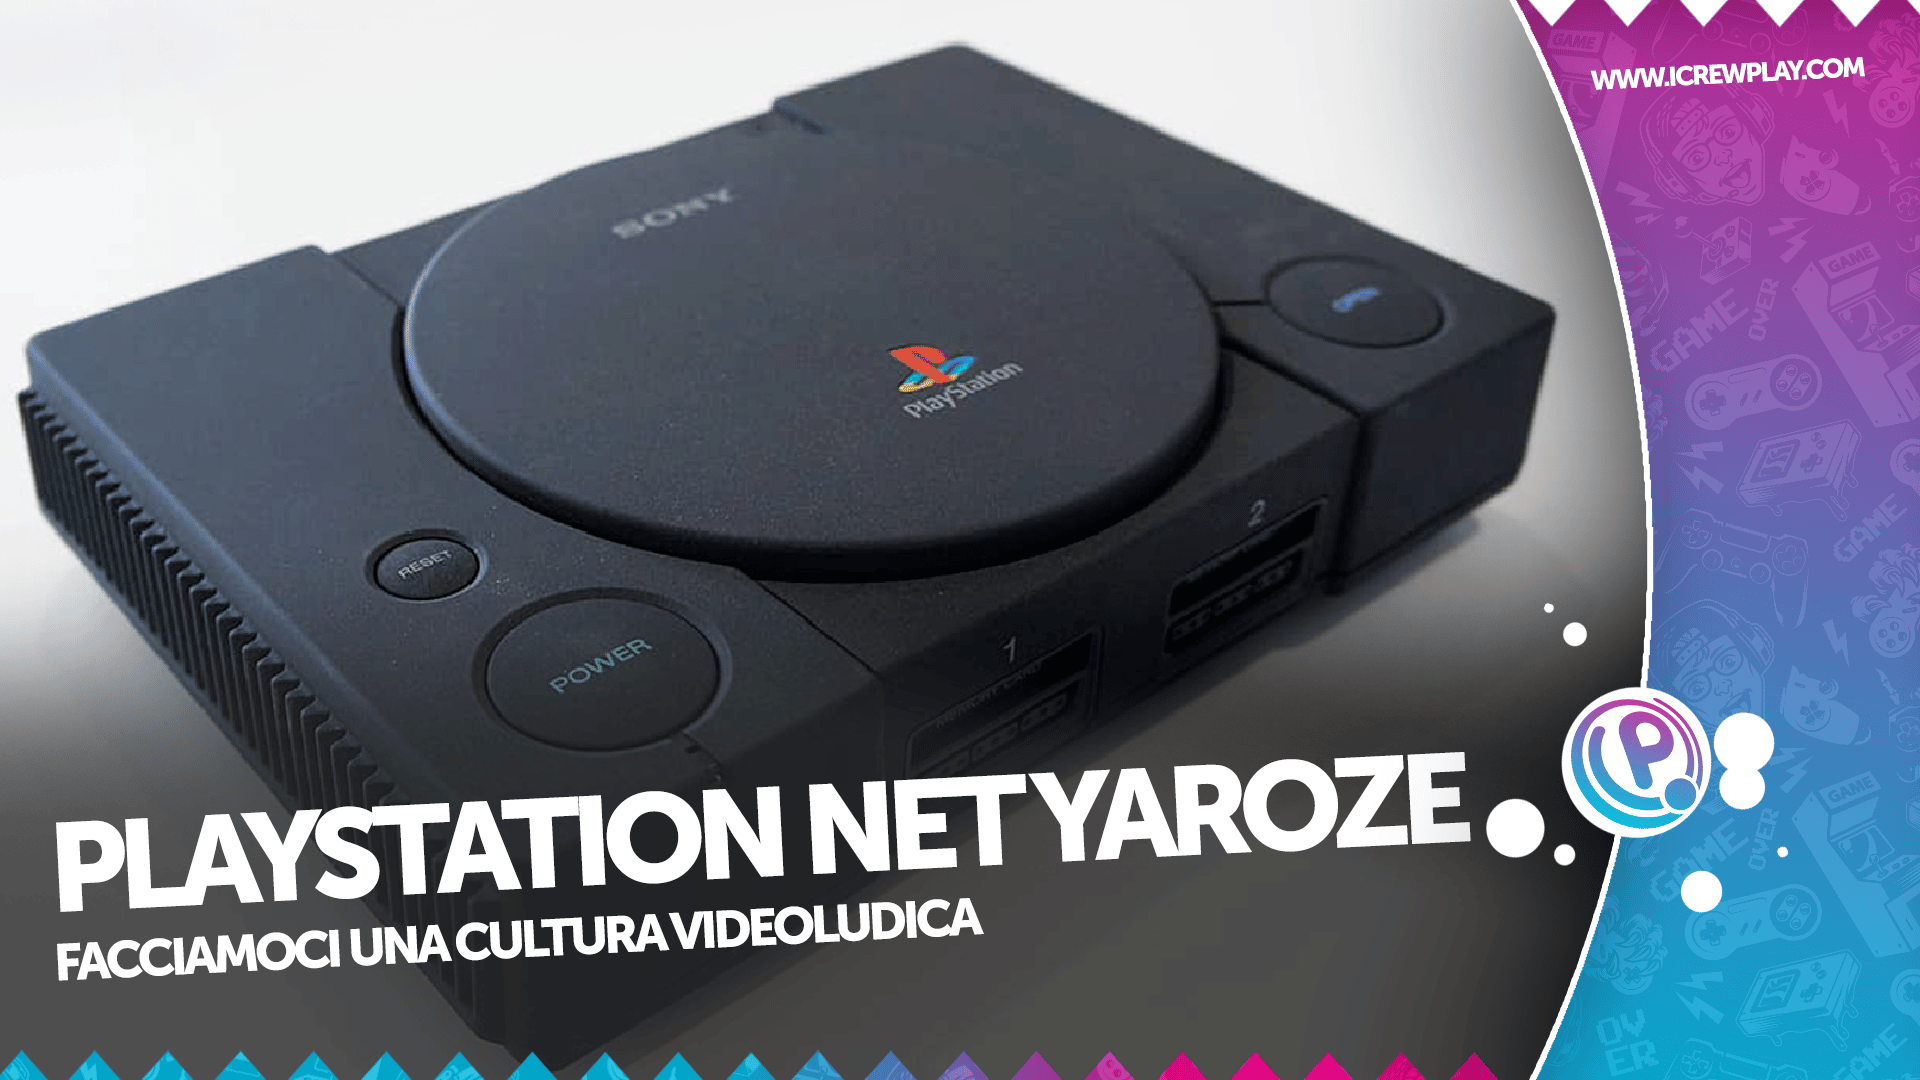 Perle di cultura videoludica la PlayStation Net Yaroze 4